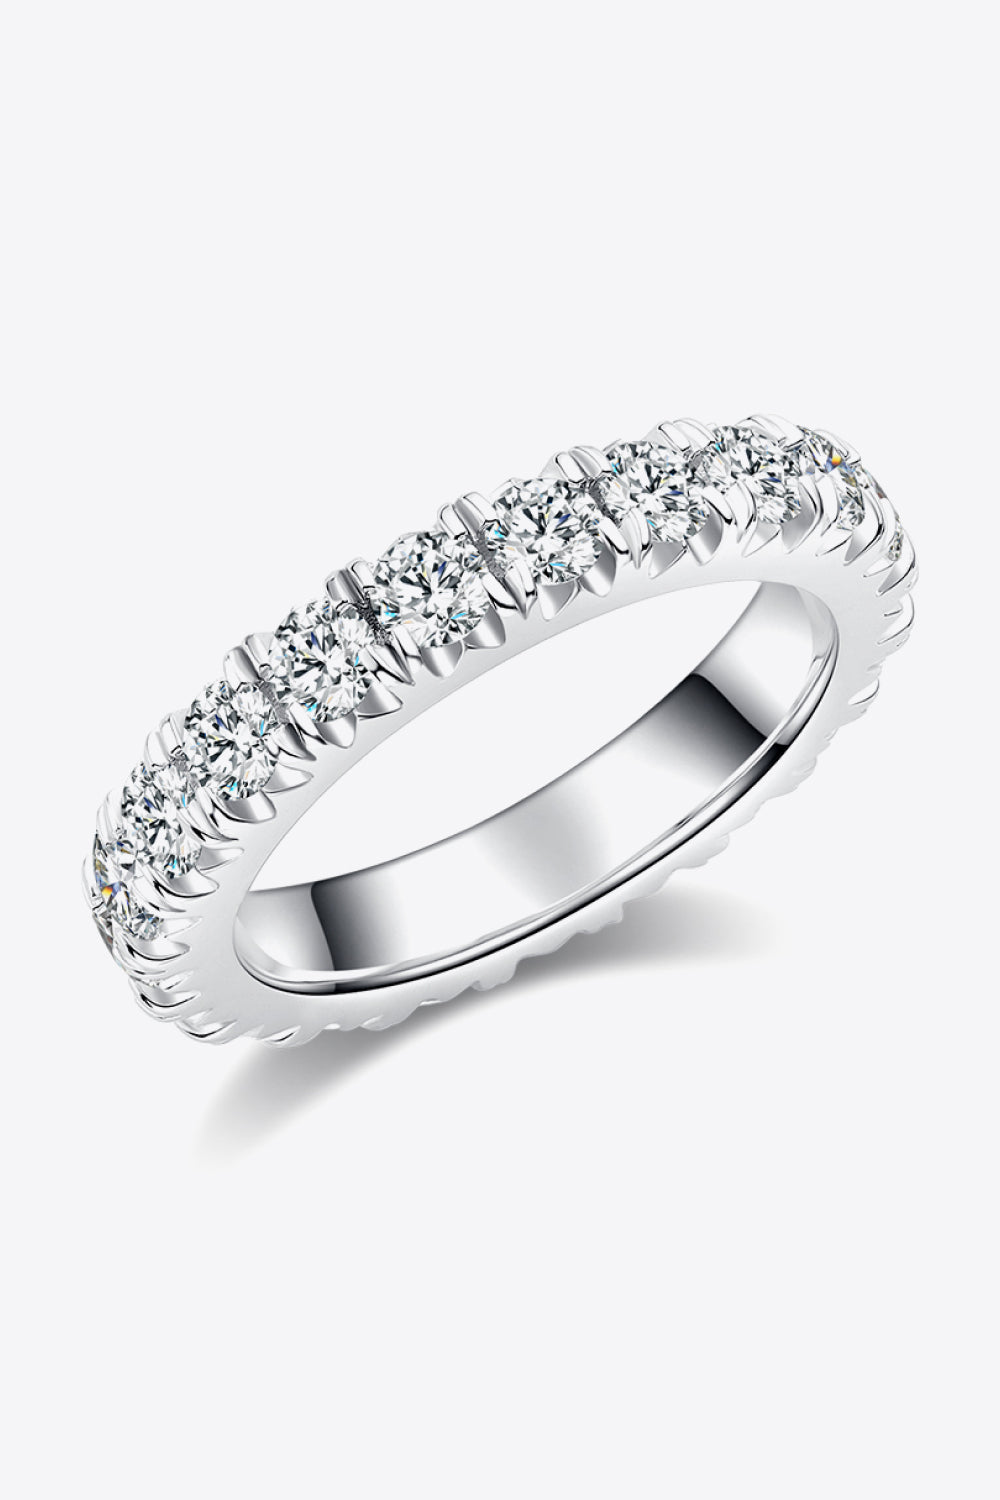 Adored Rings Baeful 2.3 Carat Moissanite 925 Sterling Silver Eternity Ring